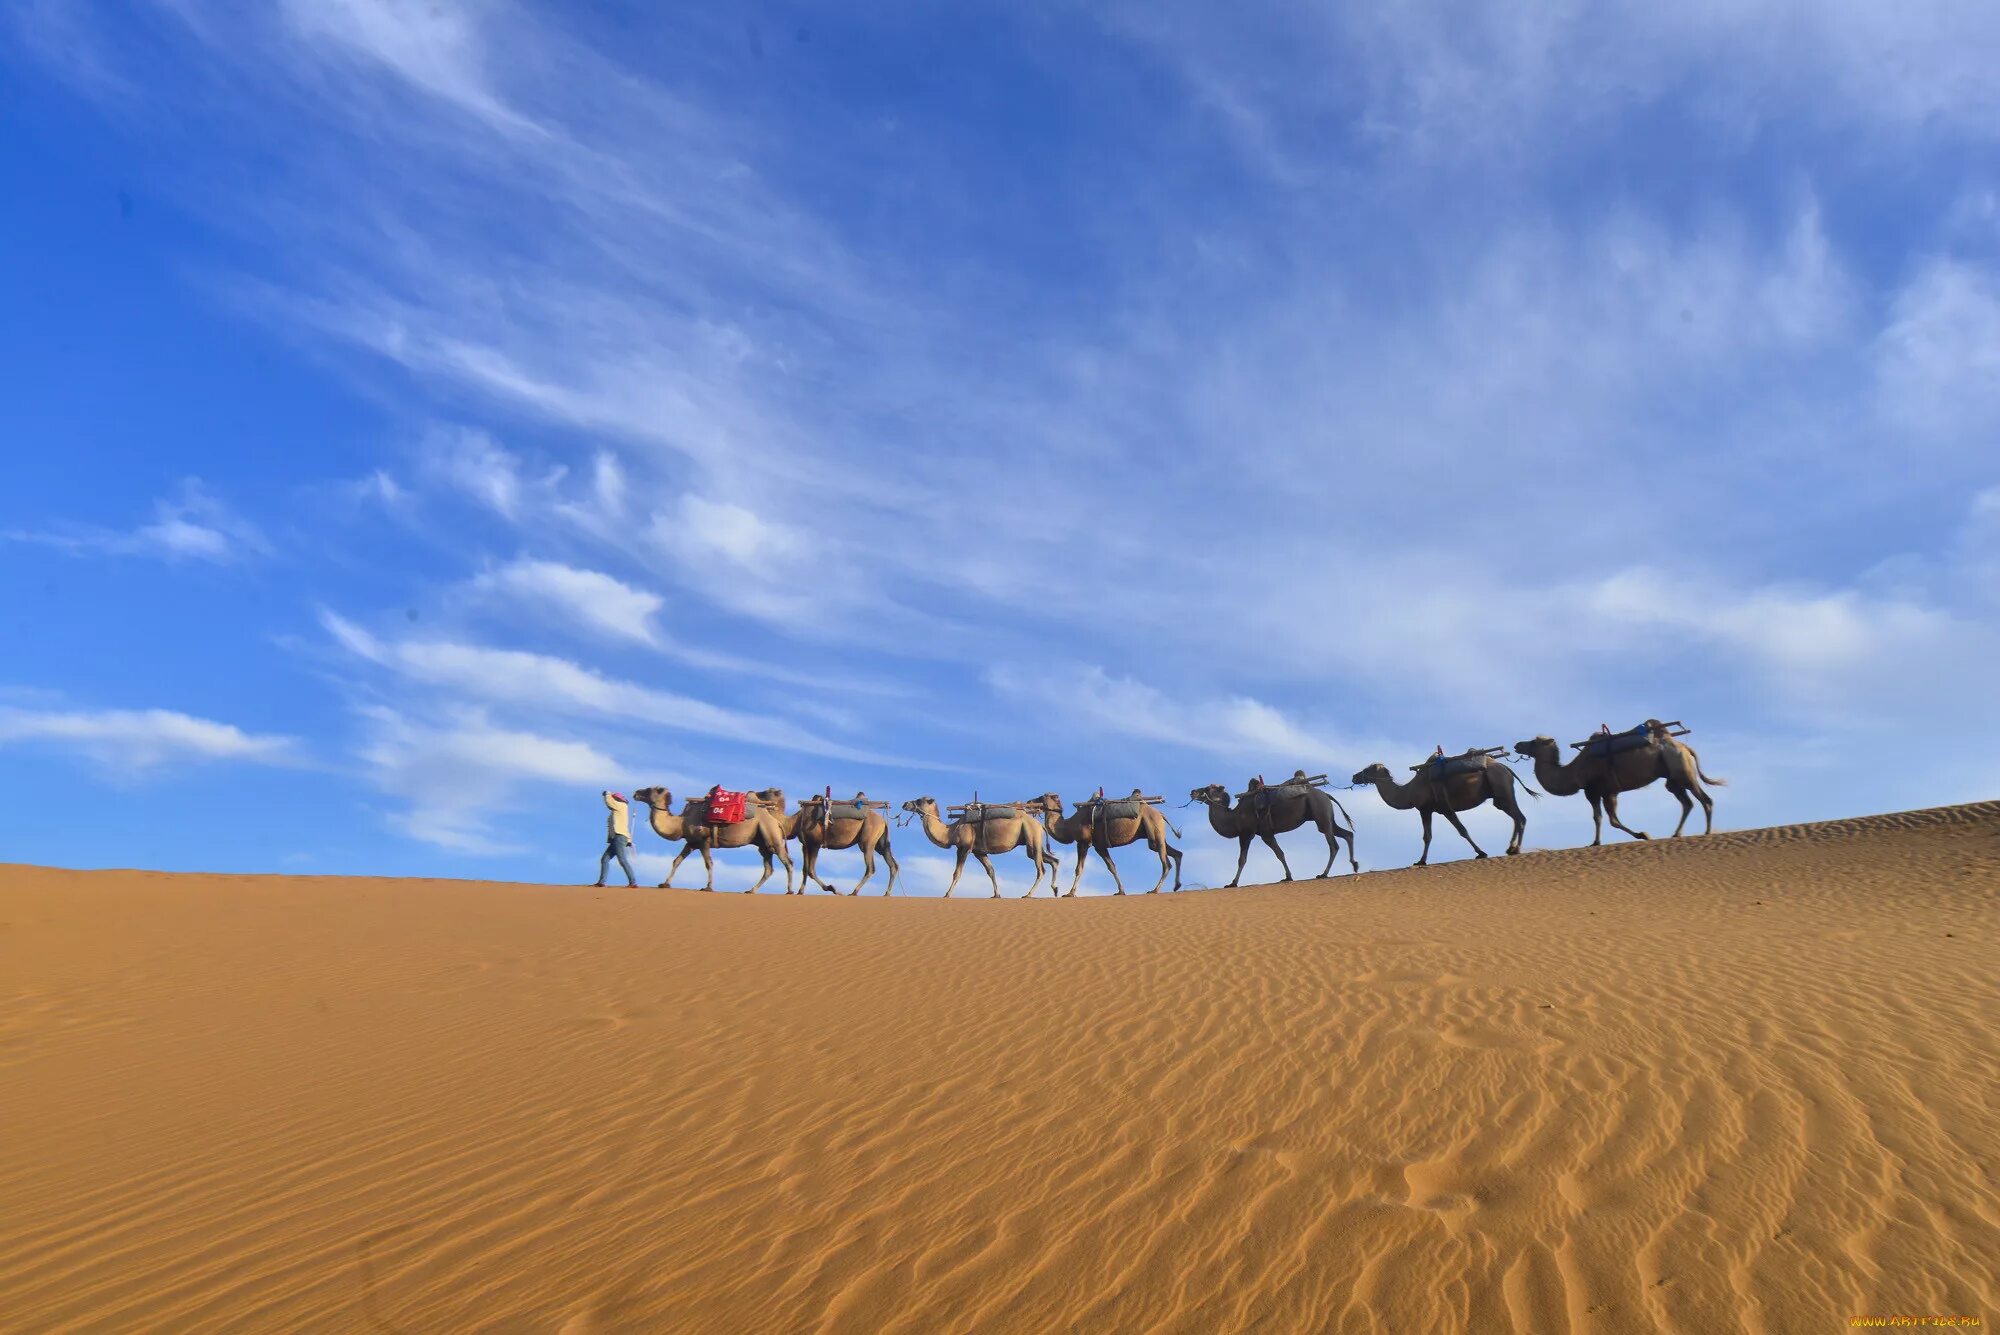 Караван движется. Караван в пустыне. Караван верблюдов. Верблюд в пустыне. Караван верблюдов в пустыне.